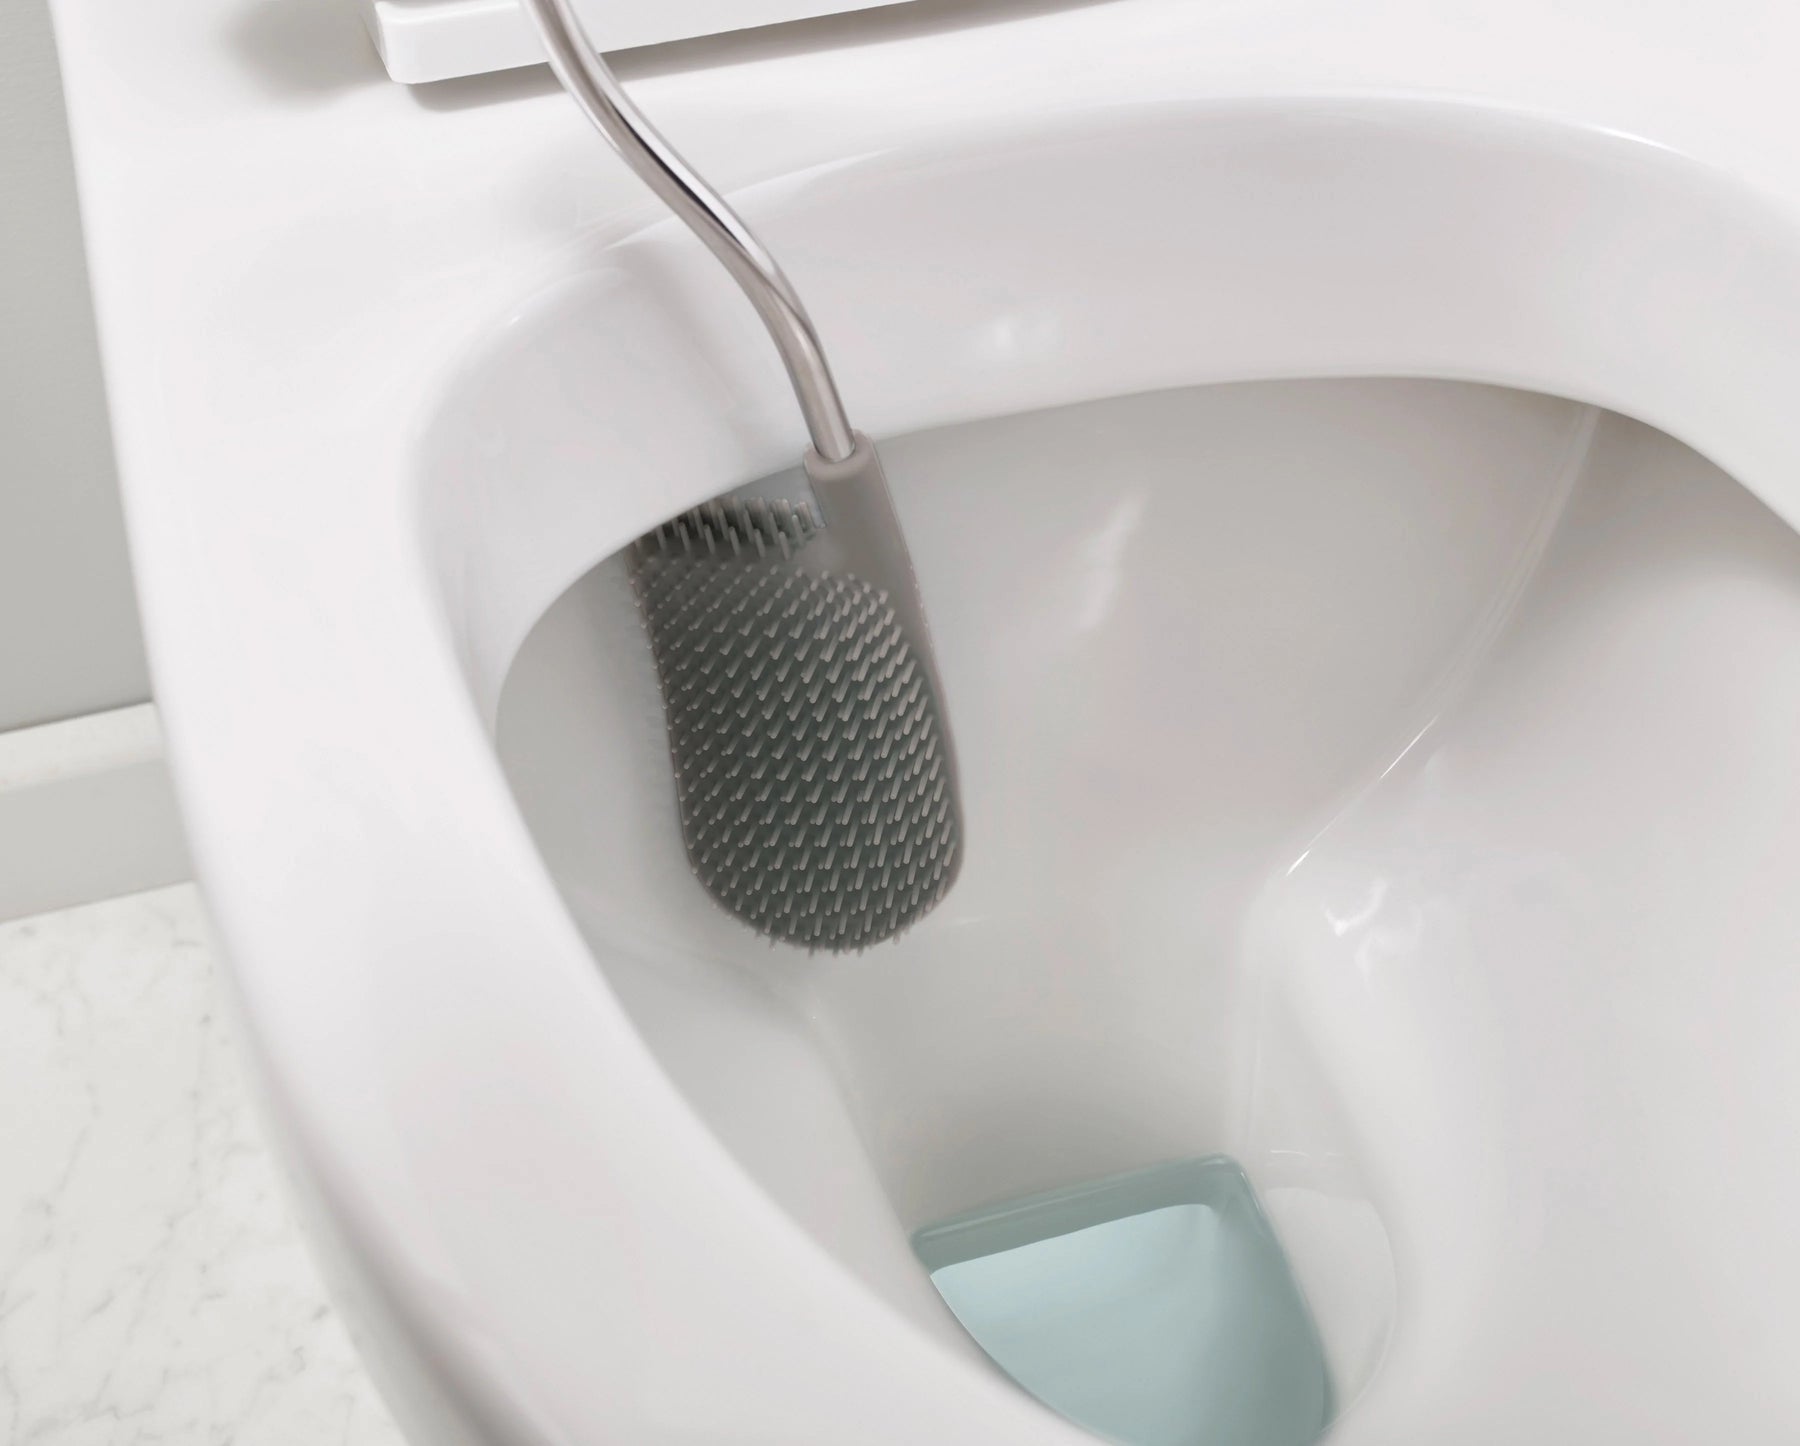 Flex Toilet Brush in toilet